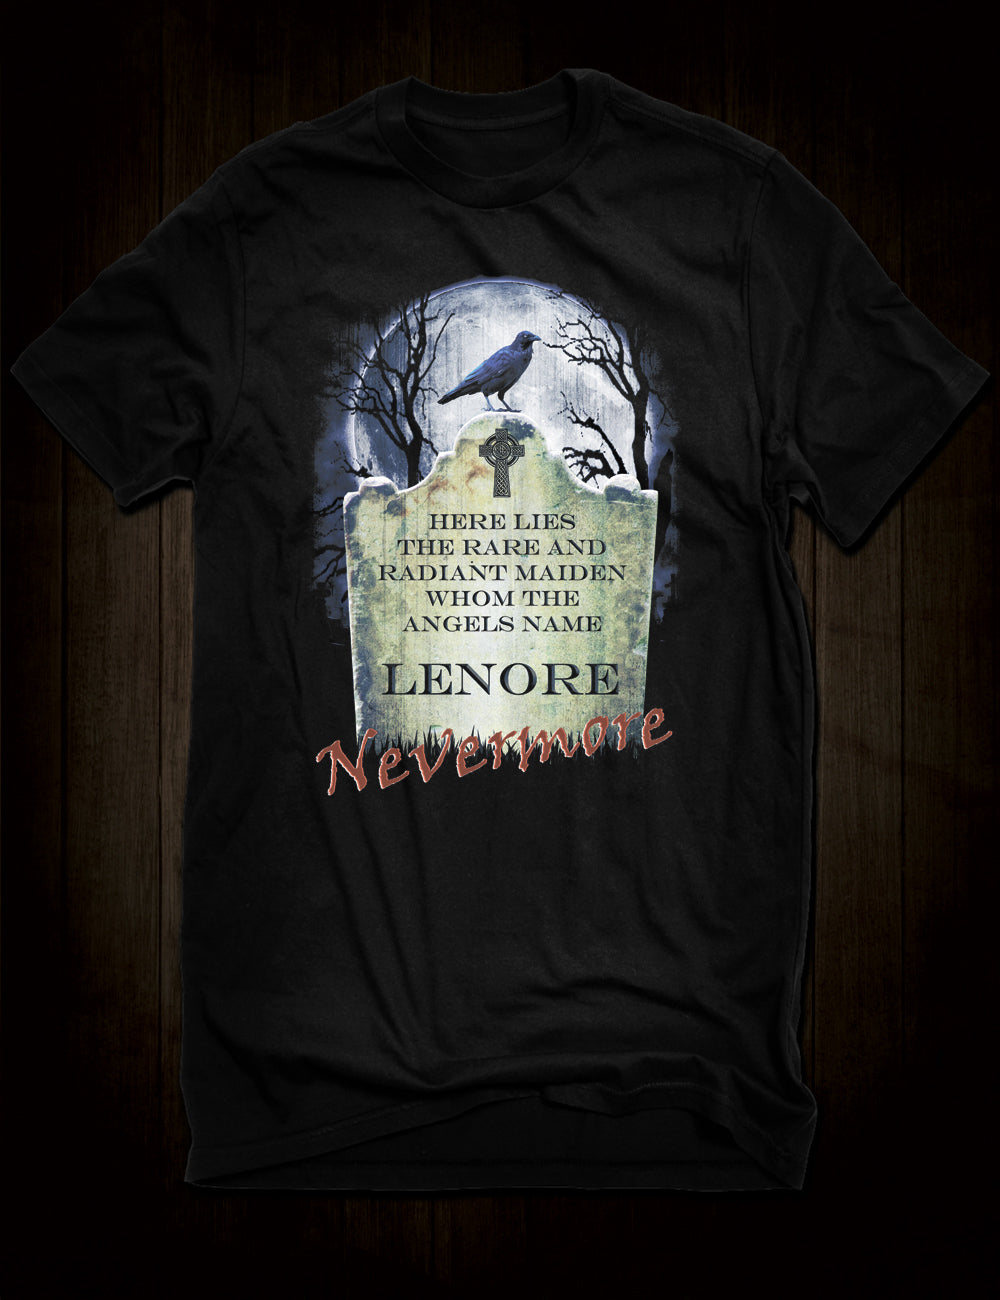 Edgar Allan Poe's The Raven T-Shirt